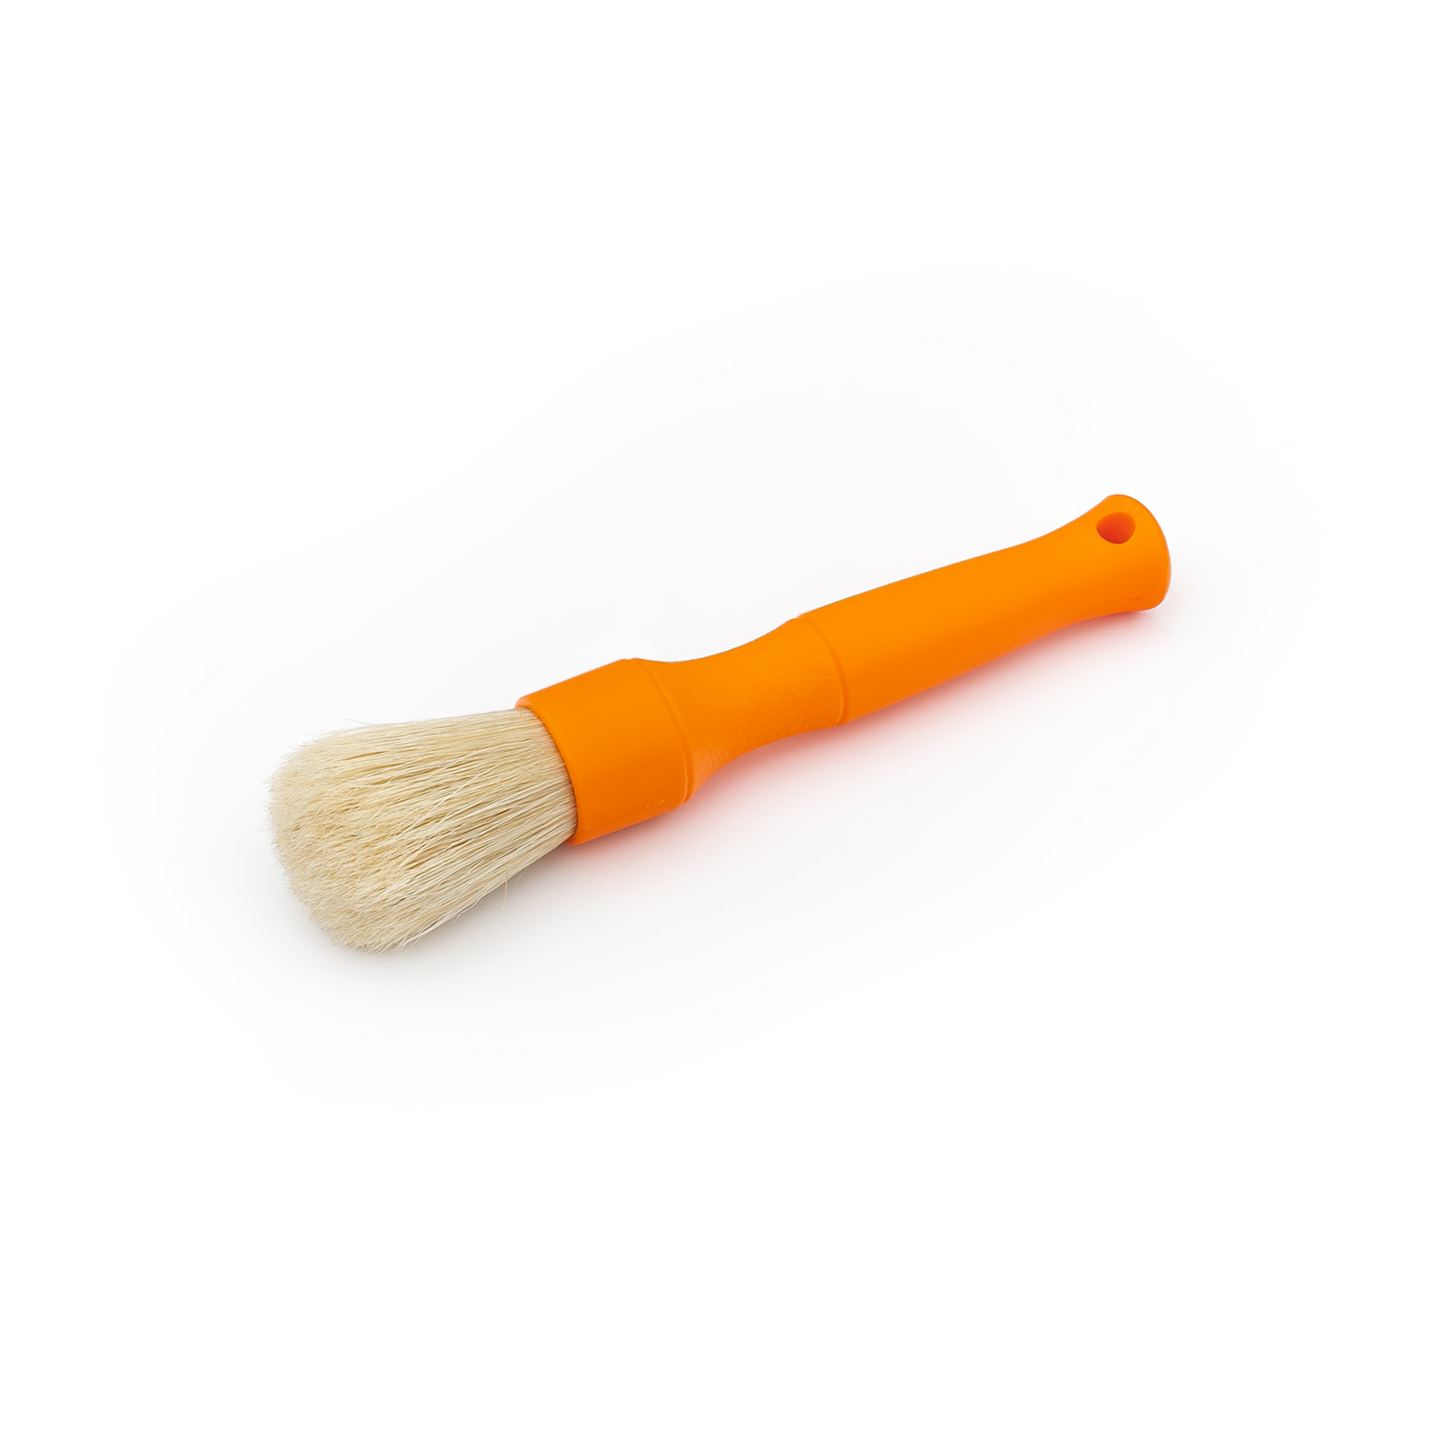 DETAIL FACTORY Detailing Brushes